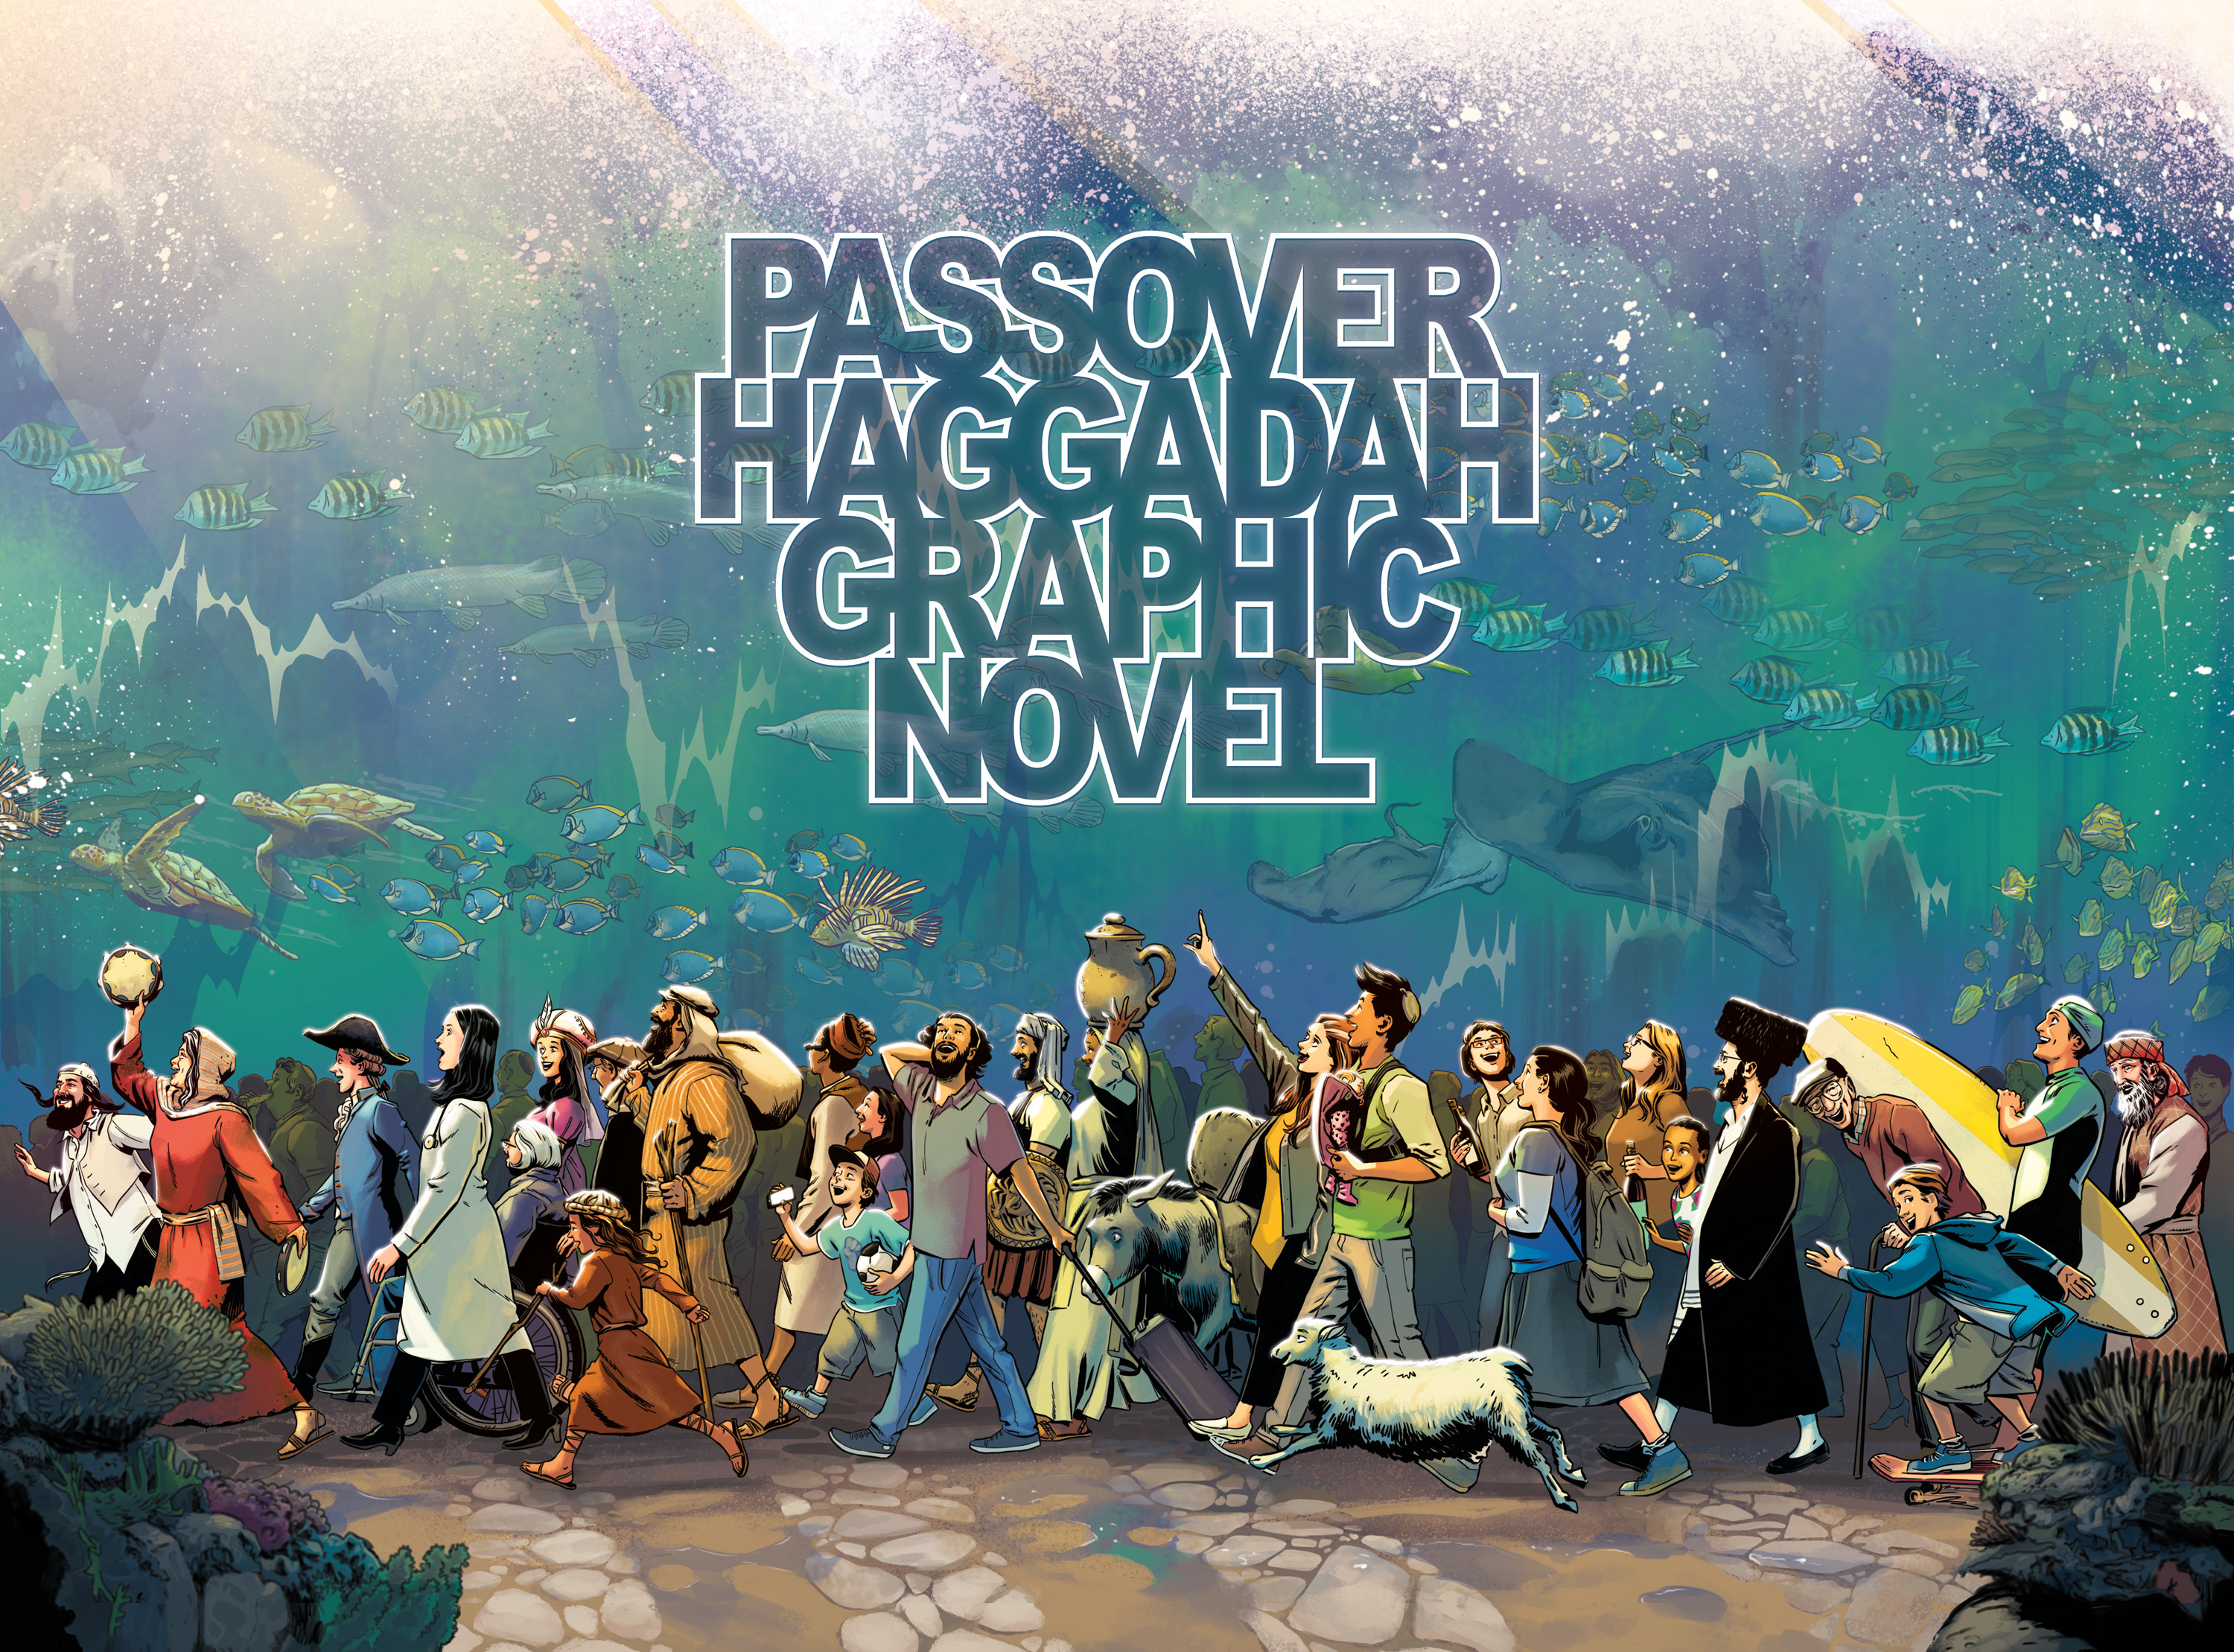 The Passover Haggadah Graphic Novel